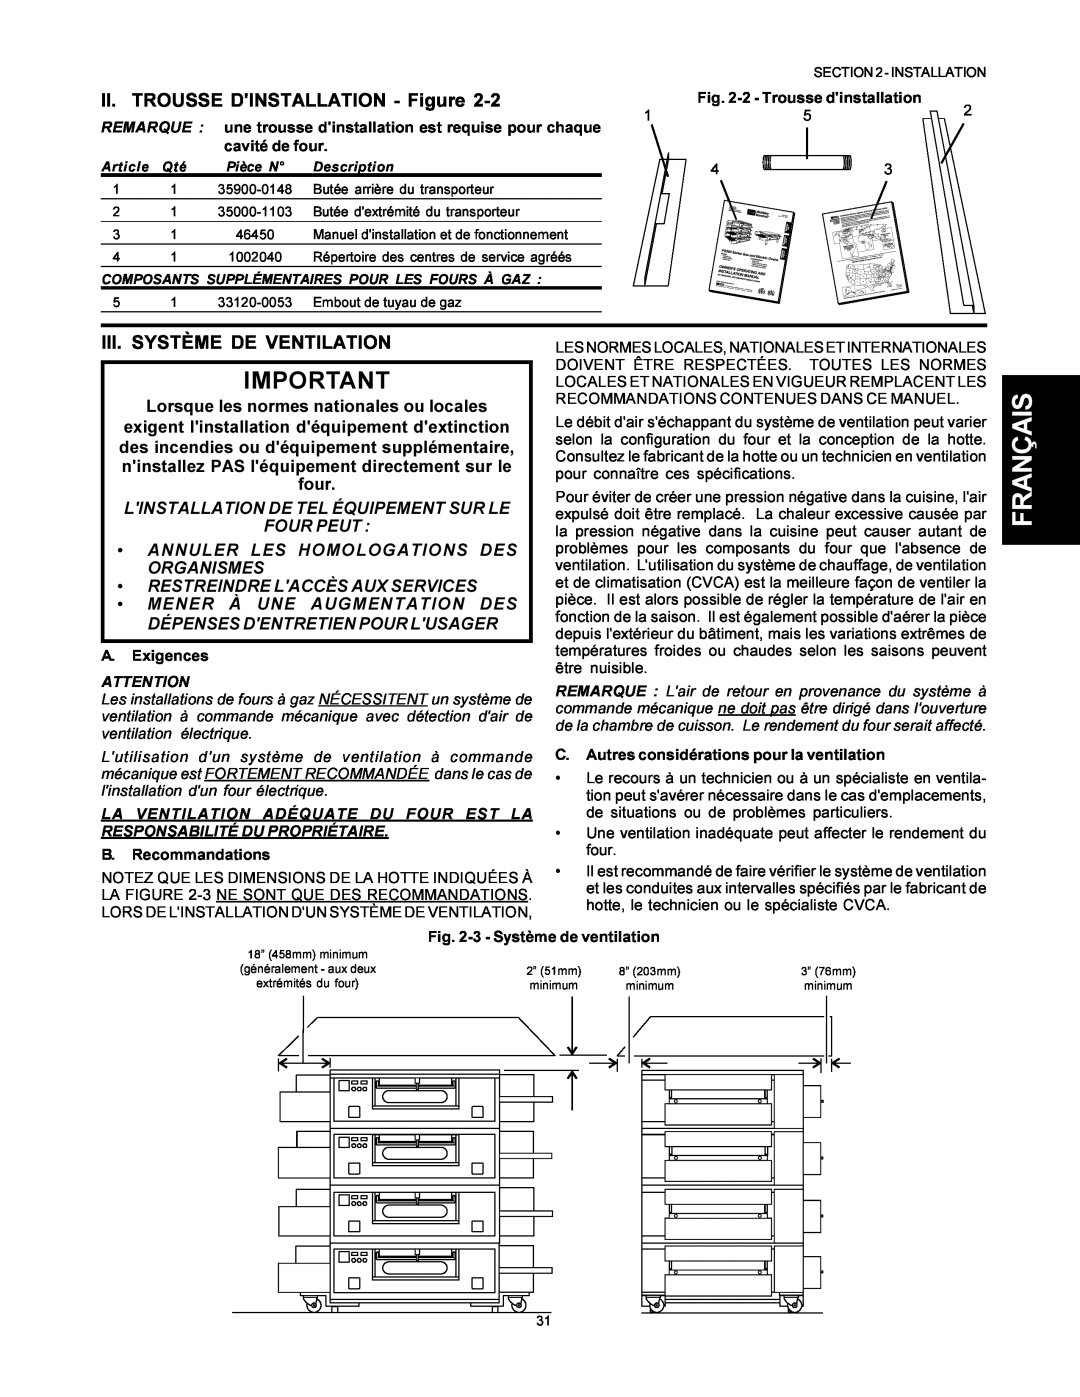 Middleby Marshall PS500 II. TROUSSE DINSTALLATION - Figure, Iii. Système De Ventilation, Restreindre Laccès Aux Services 